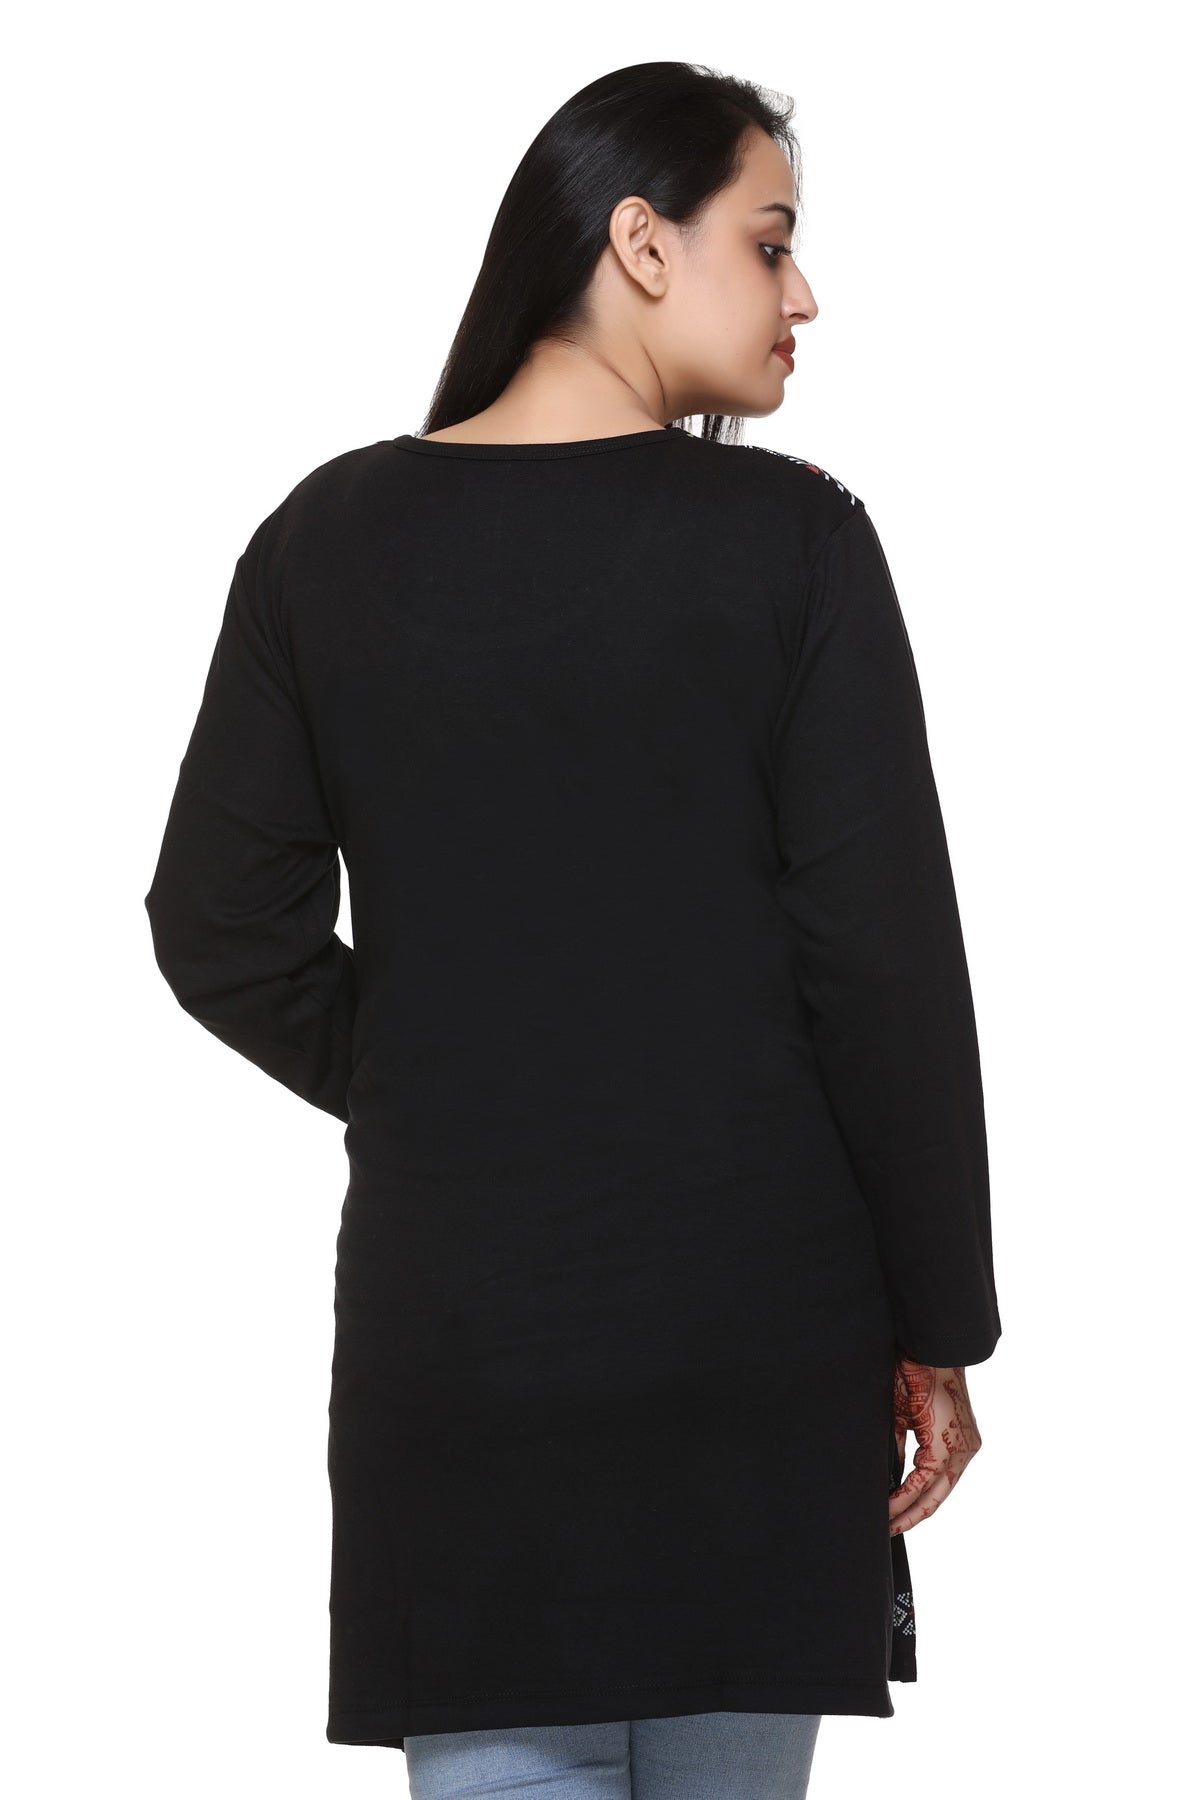 Women Plus Size Full Sleeves Black Kurti print Long Top for Winters & Semi Winters freeshipping - Cupid Clothings